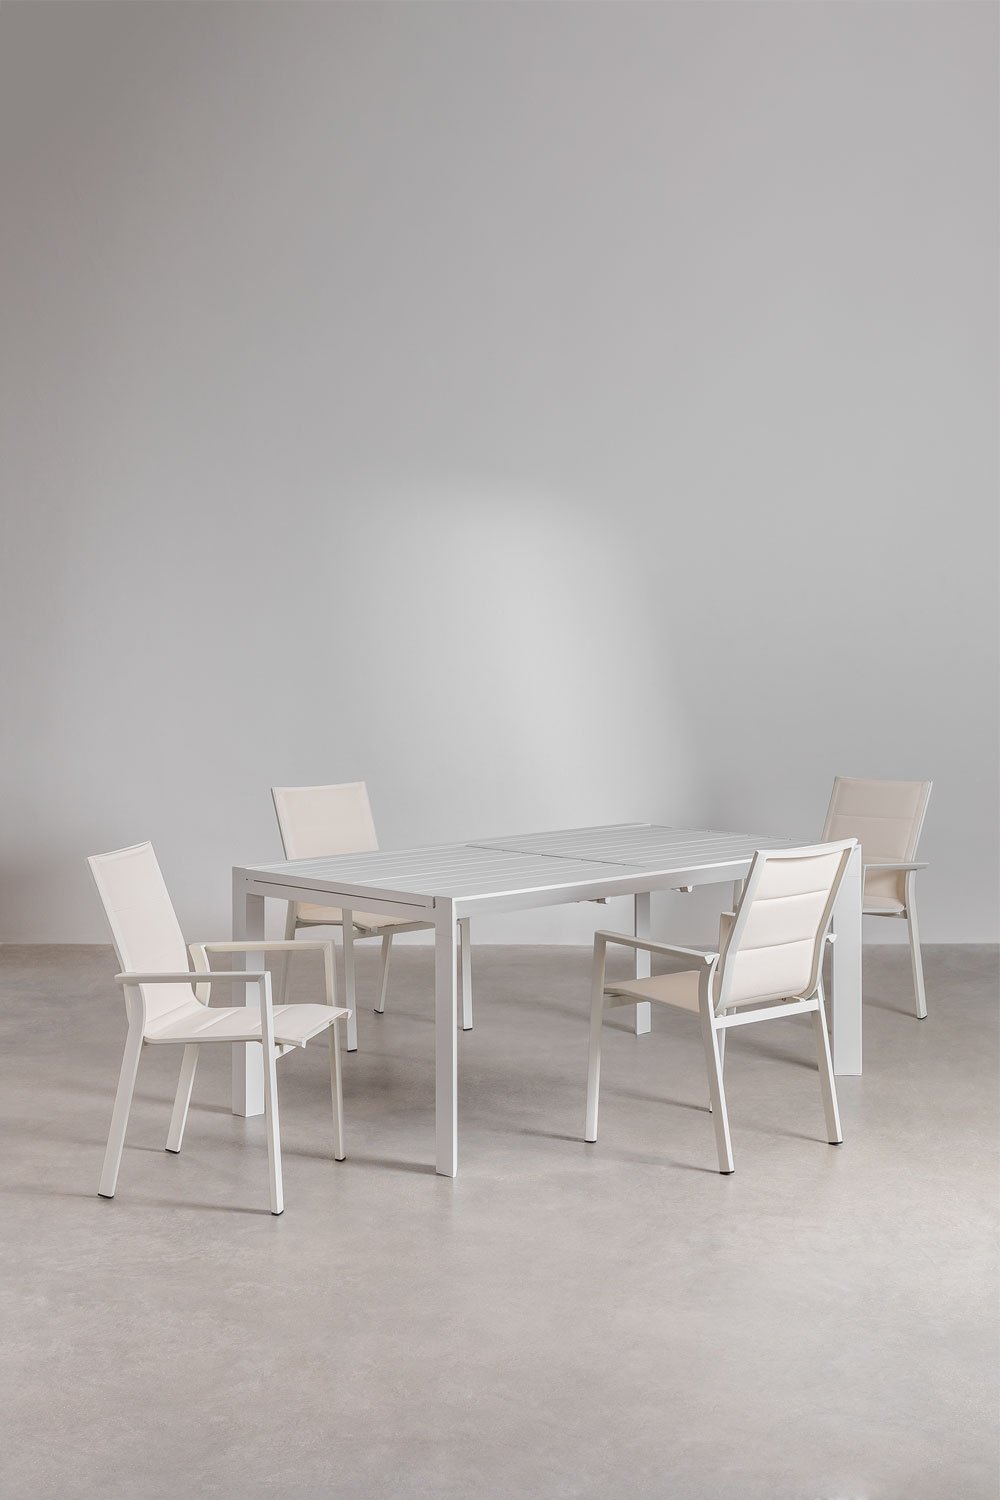 Starmi uitschuifbare rechthoekige aluminium tafelset (180-240x100 cm) en 4 Karena aluminium stapelbare tuinstoelen, galerij beeld 1